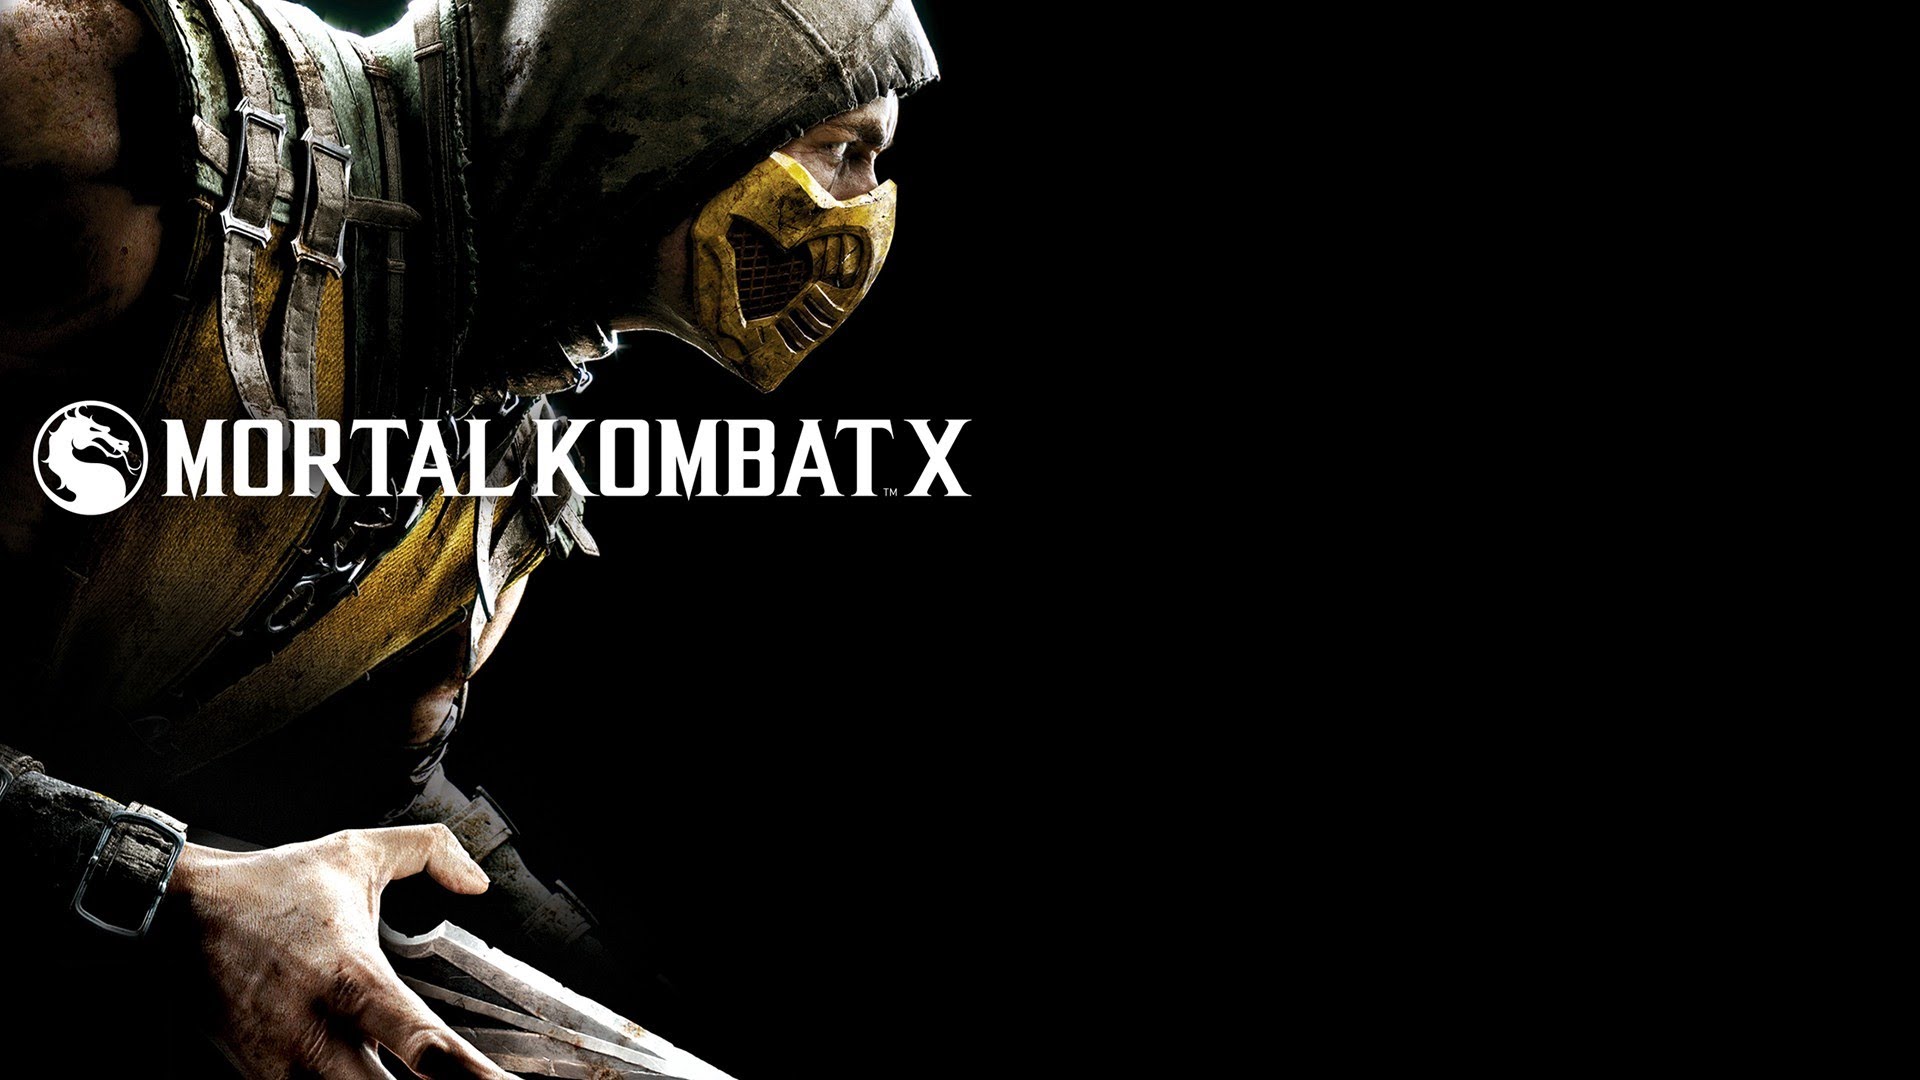 Mortal Kombat X version for PC